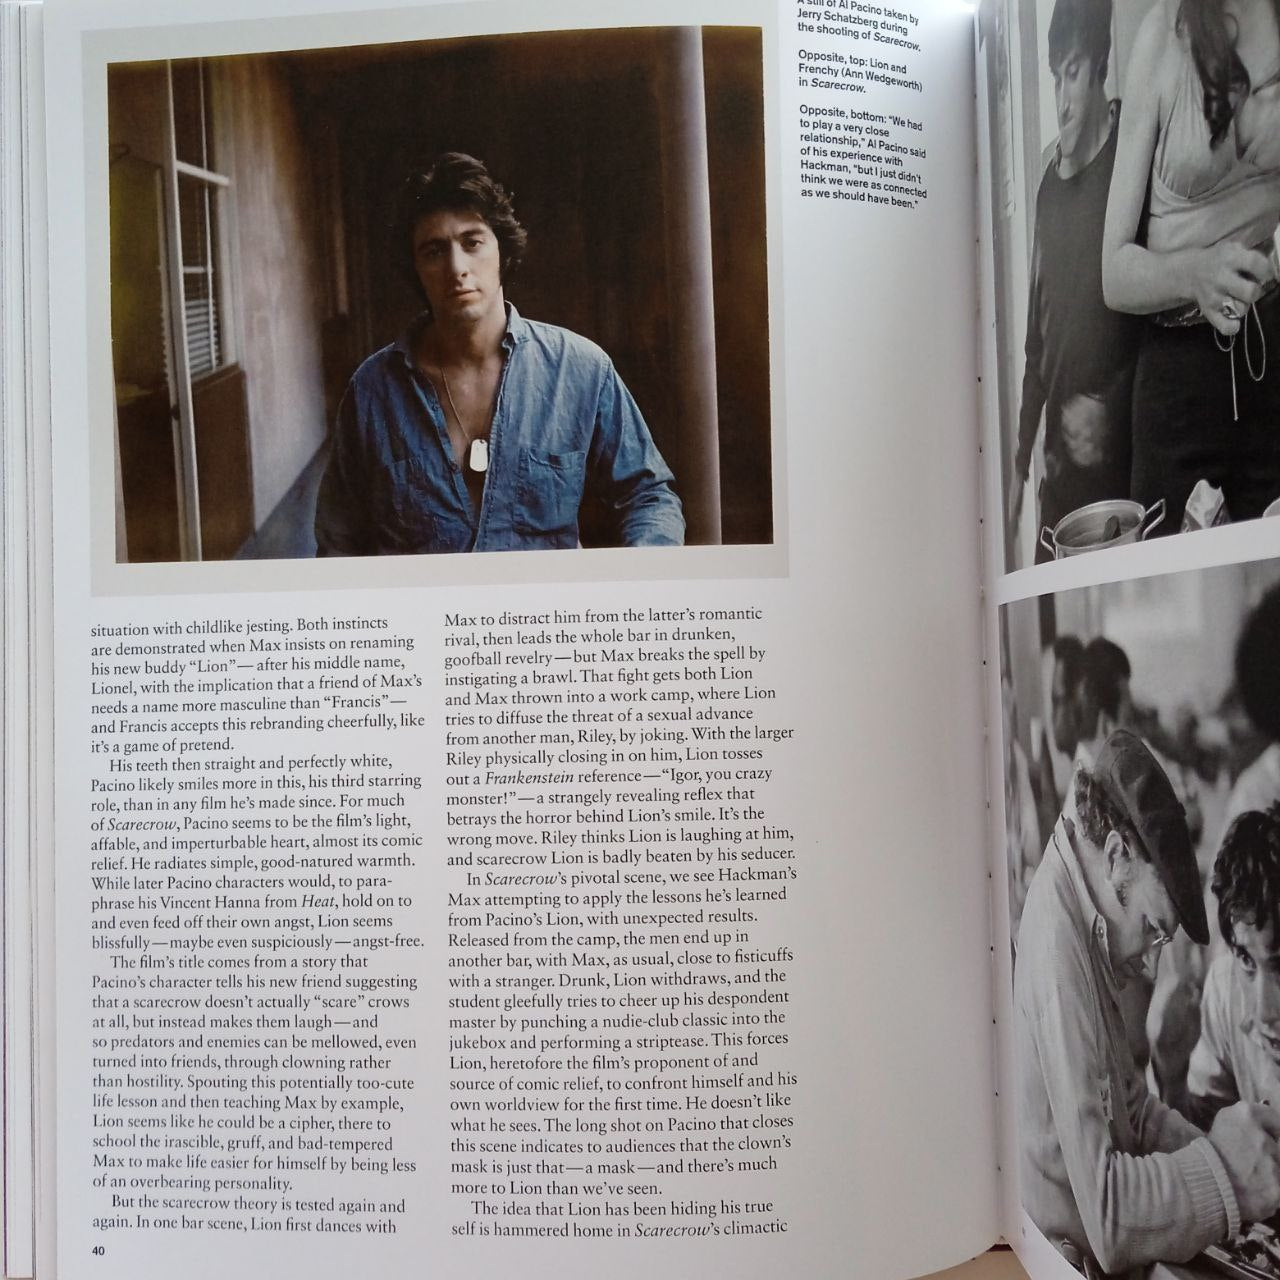 Anatomy Of An Actor: Al Pacino